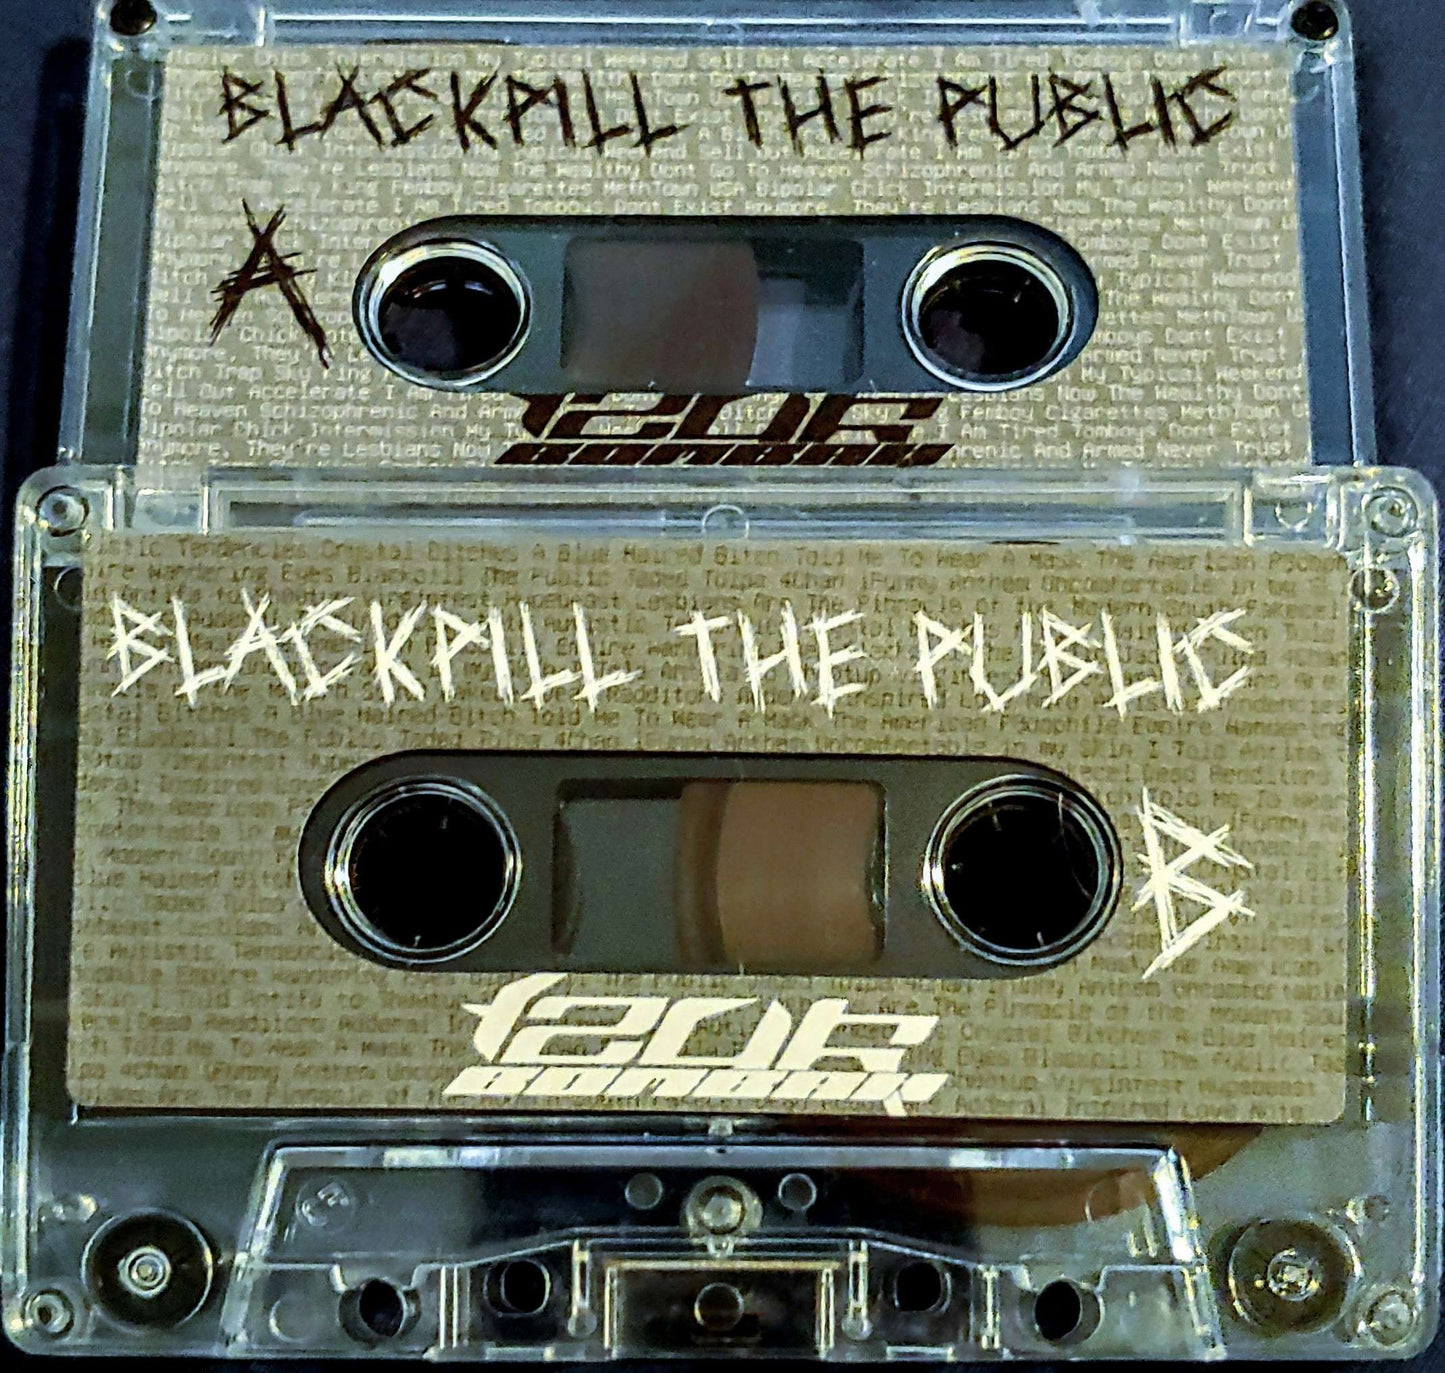 Blackpill the Public